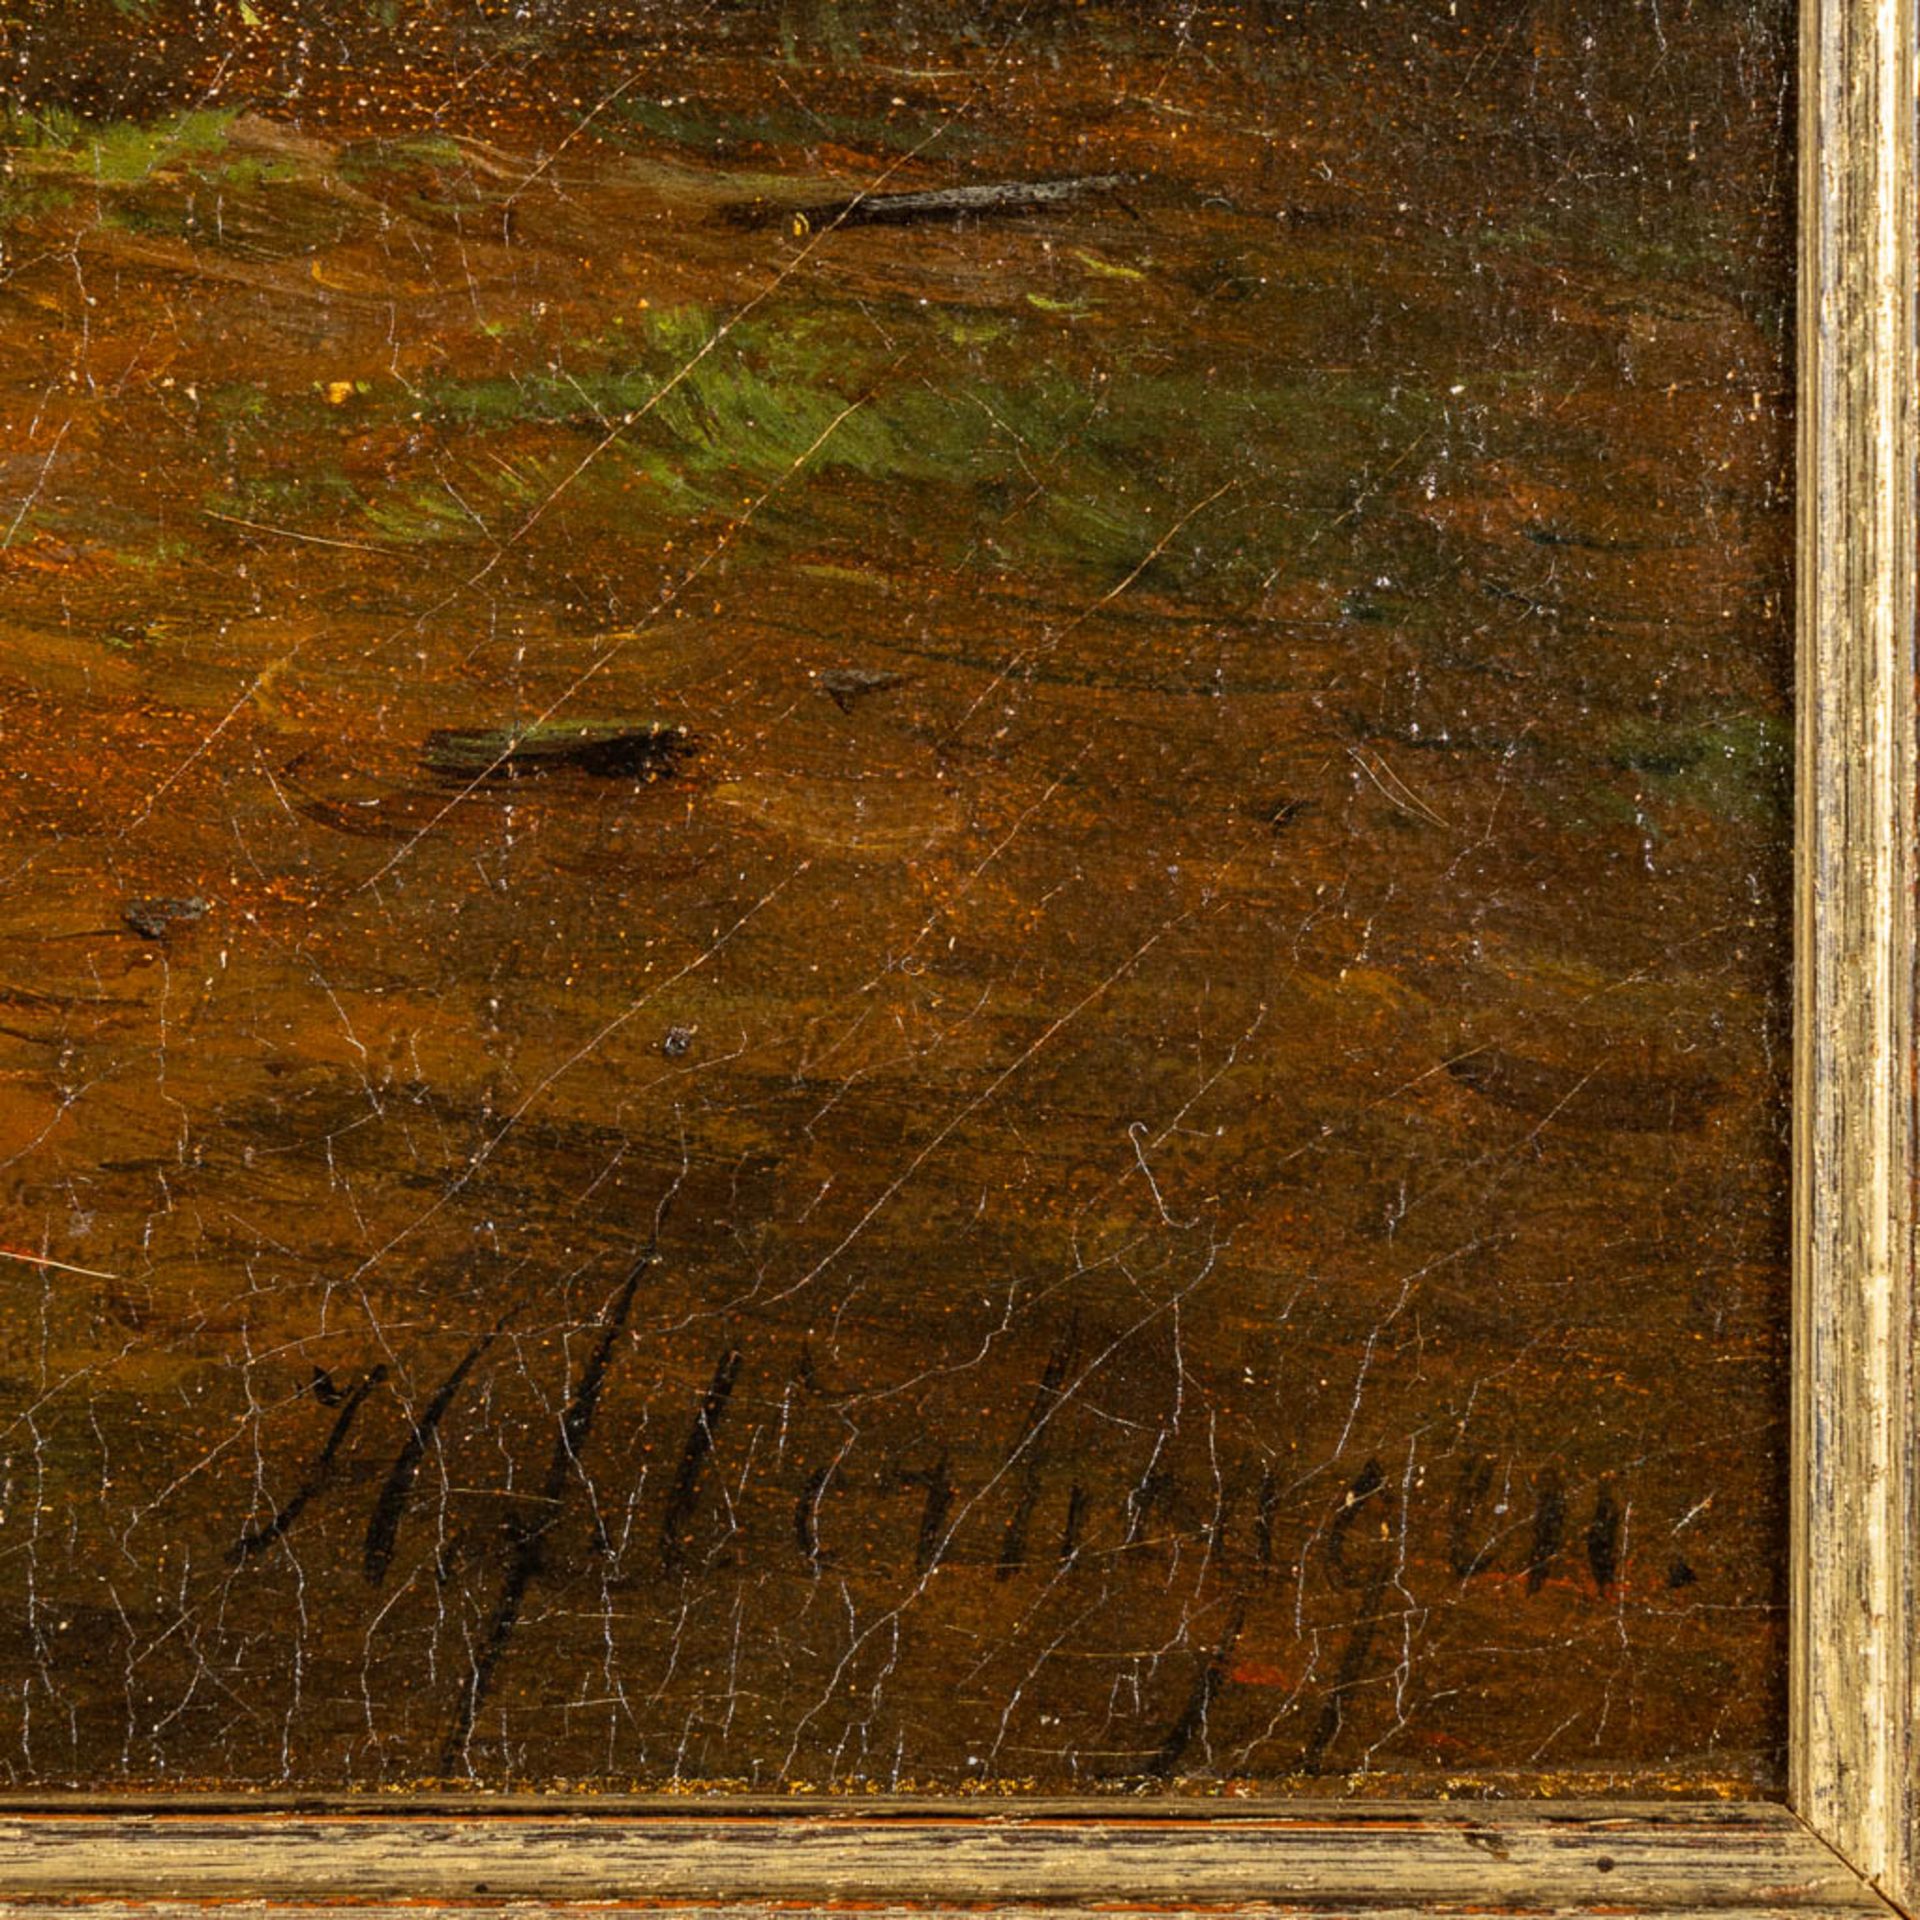 Hendrik VERHEGGEN (1809-1883) 'Sheep in a forest' Barbizon School, oil on canvas. (W:46 x H:58 cm) - Image 6 of 8